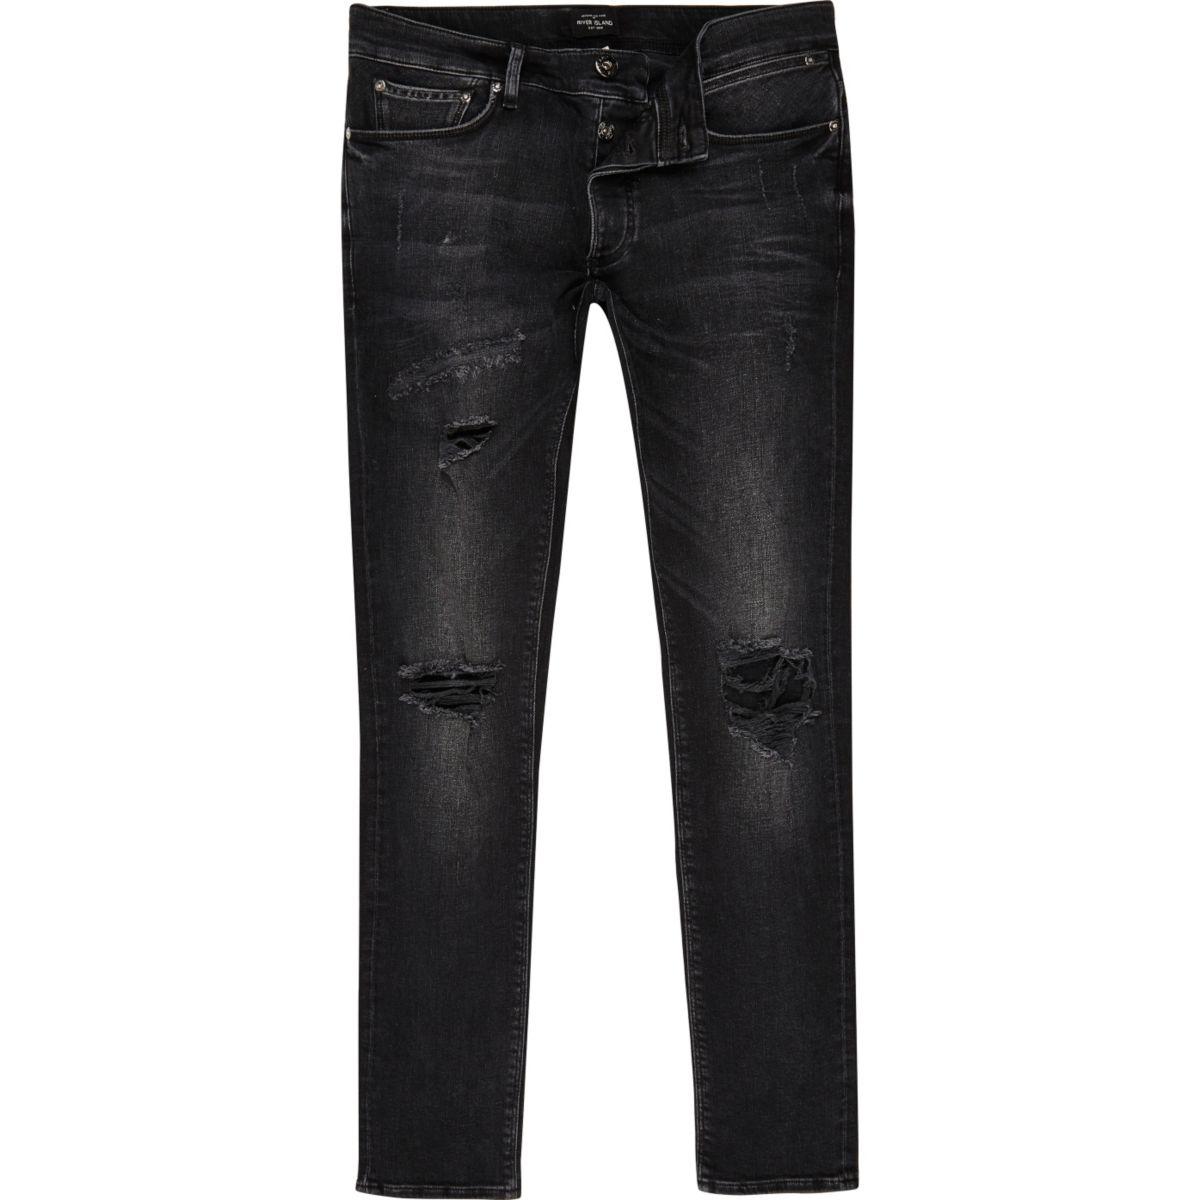 Ripped Skinny Jeans Png / Etzo mens biker jeans, skinny fit premium